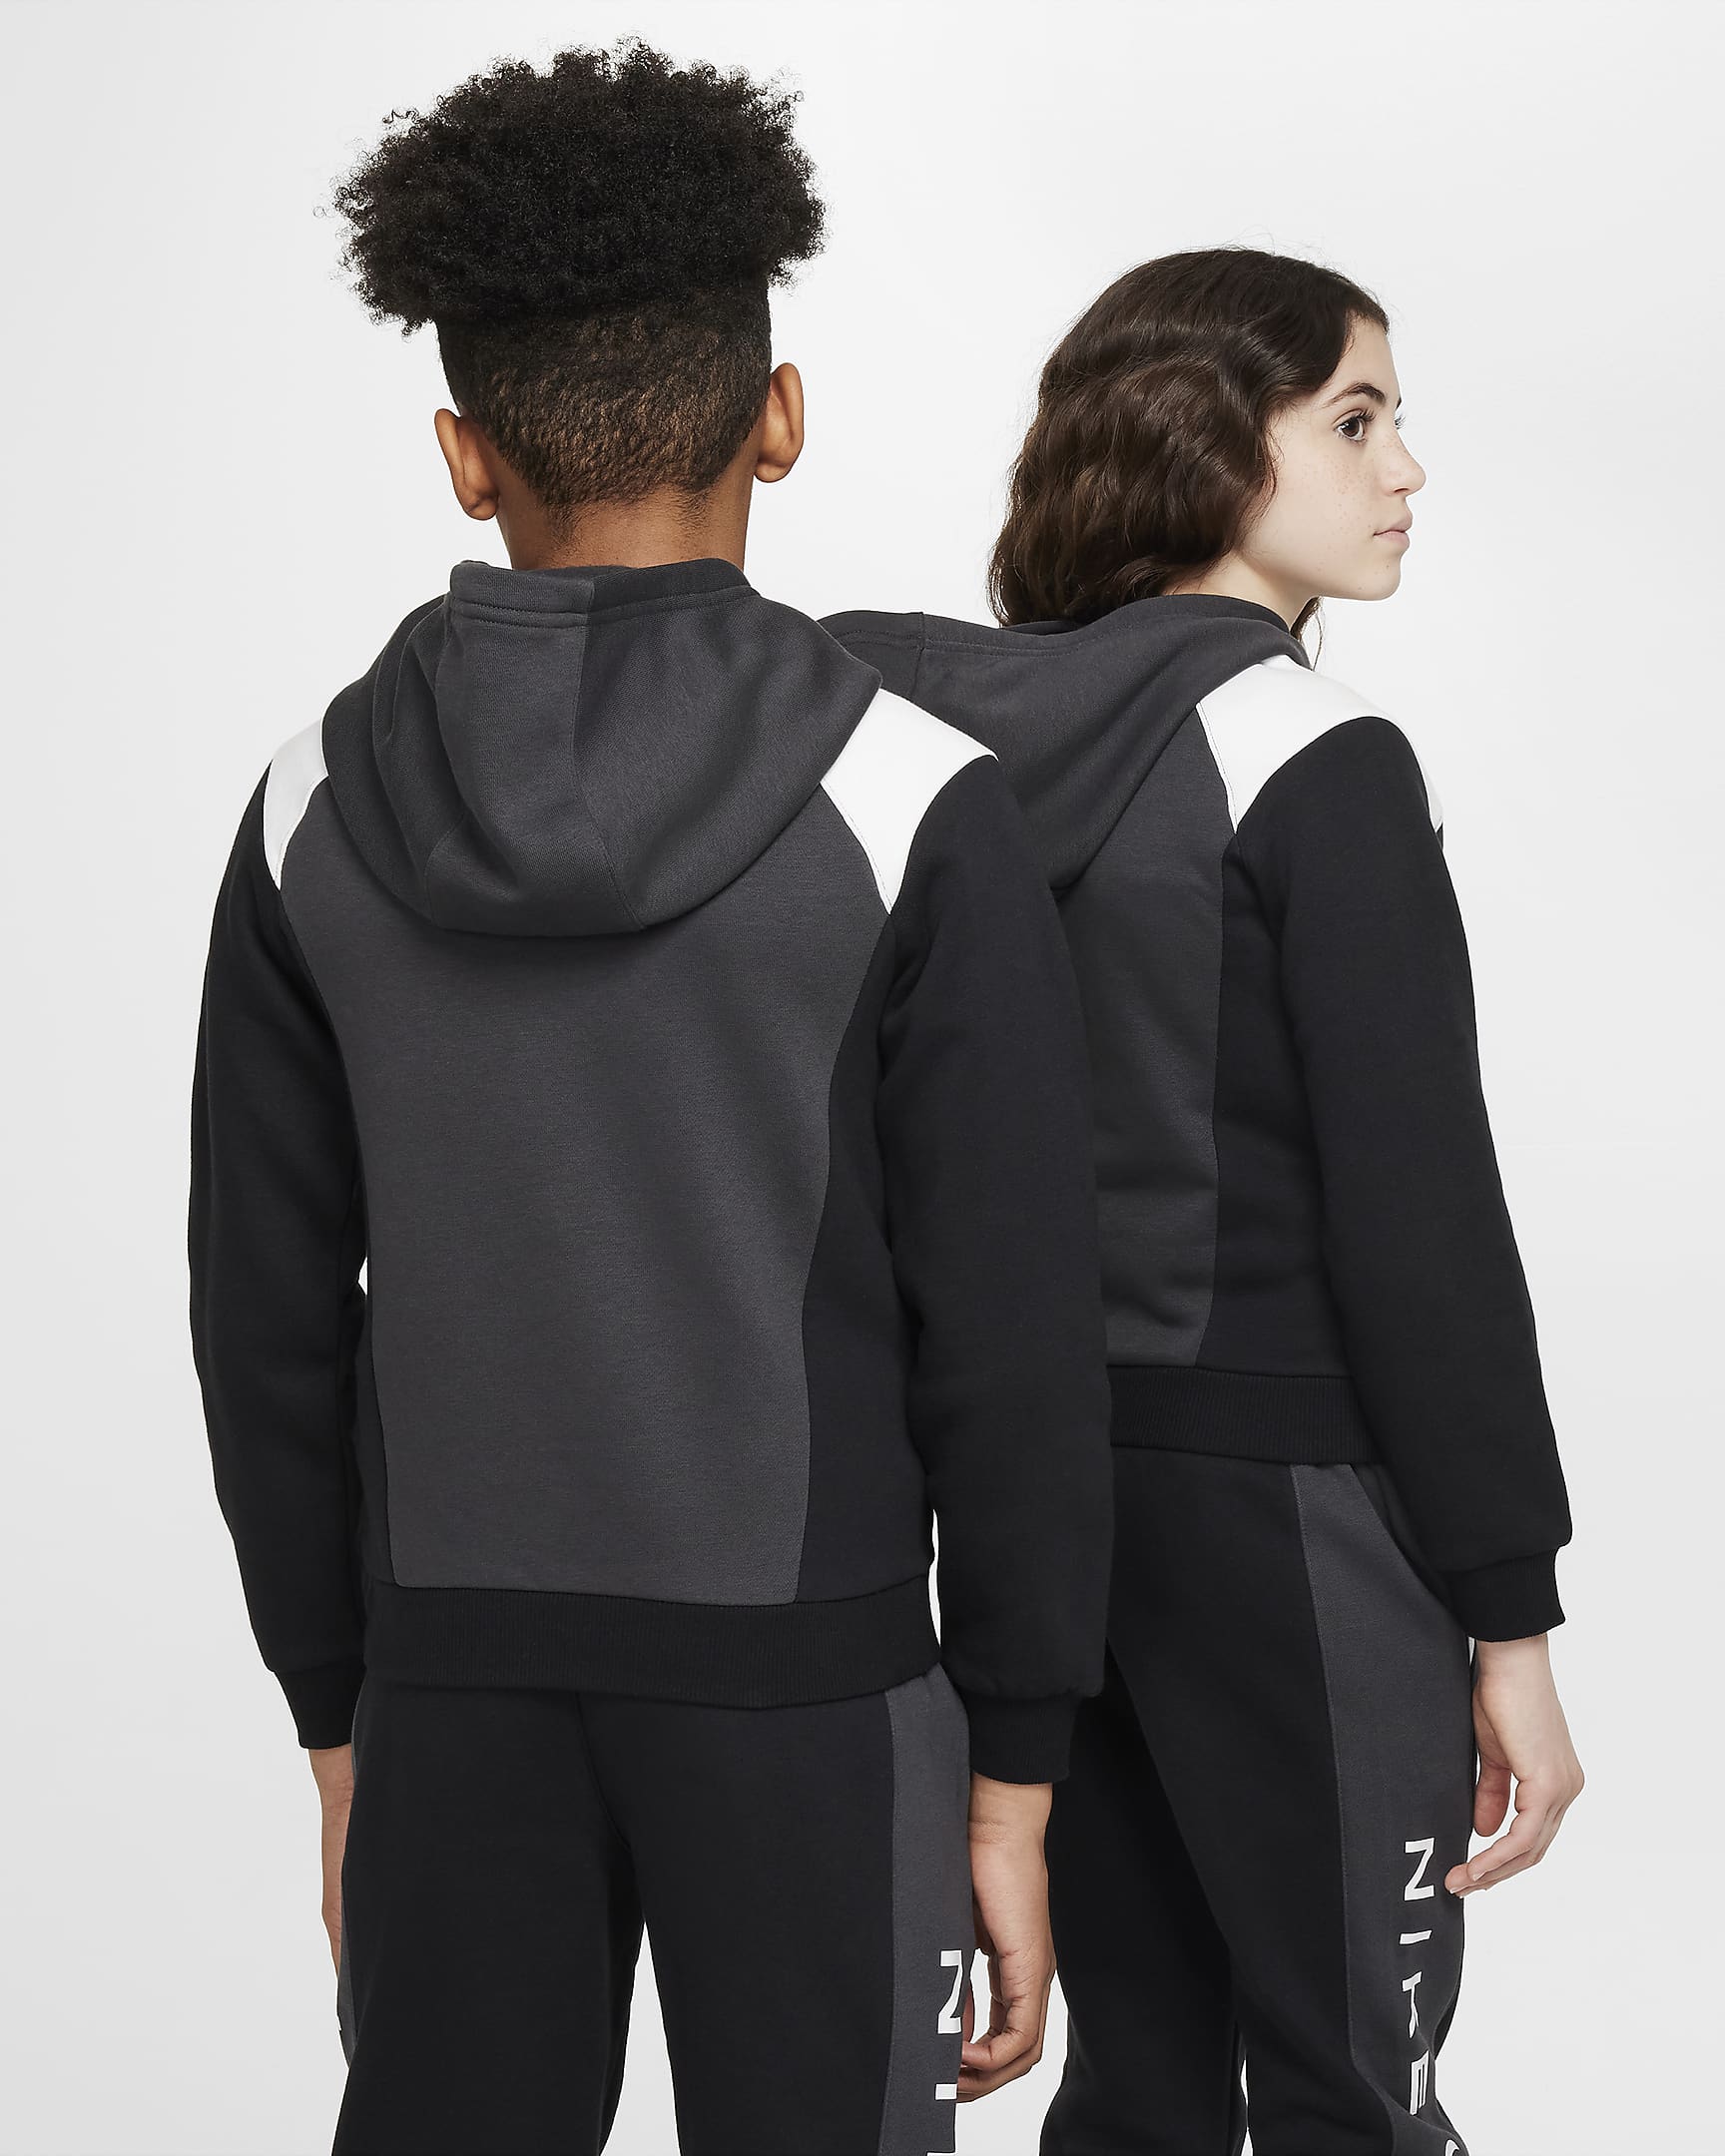 Nike Air Older Kids' Pullover Hoodie - Anthracite/Black/White/White